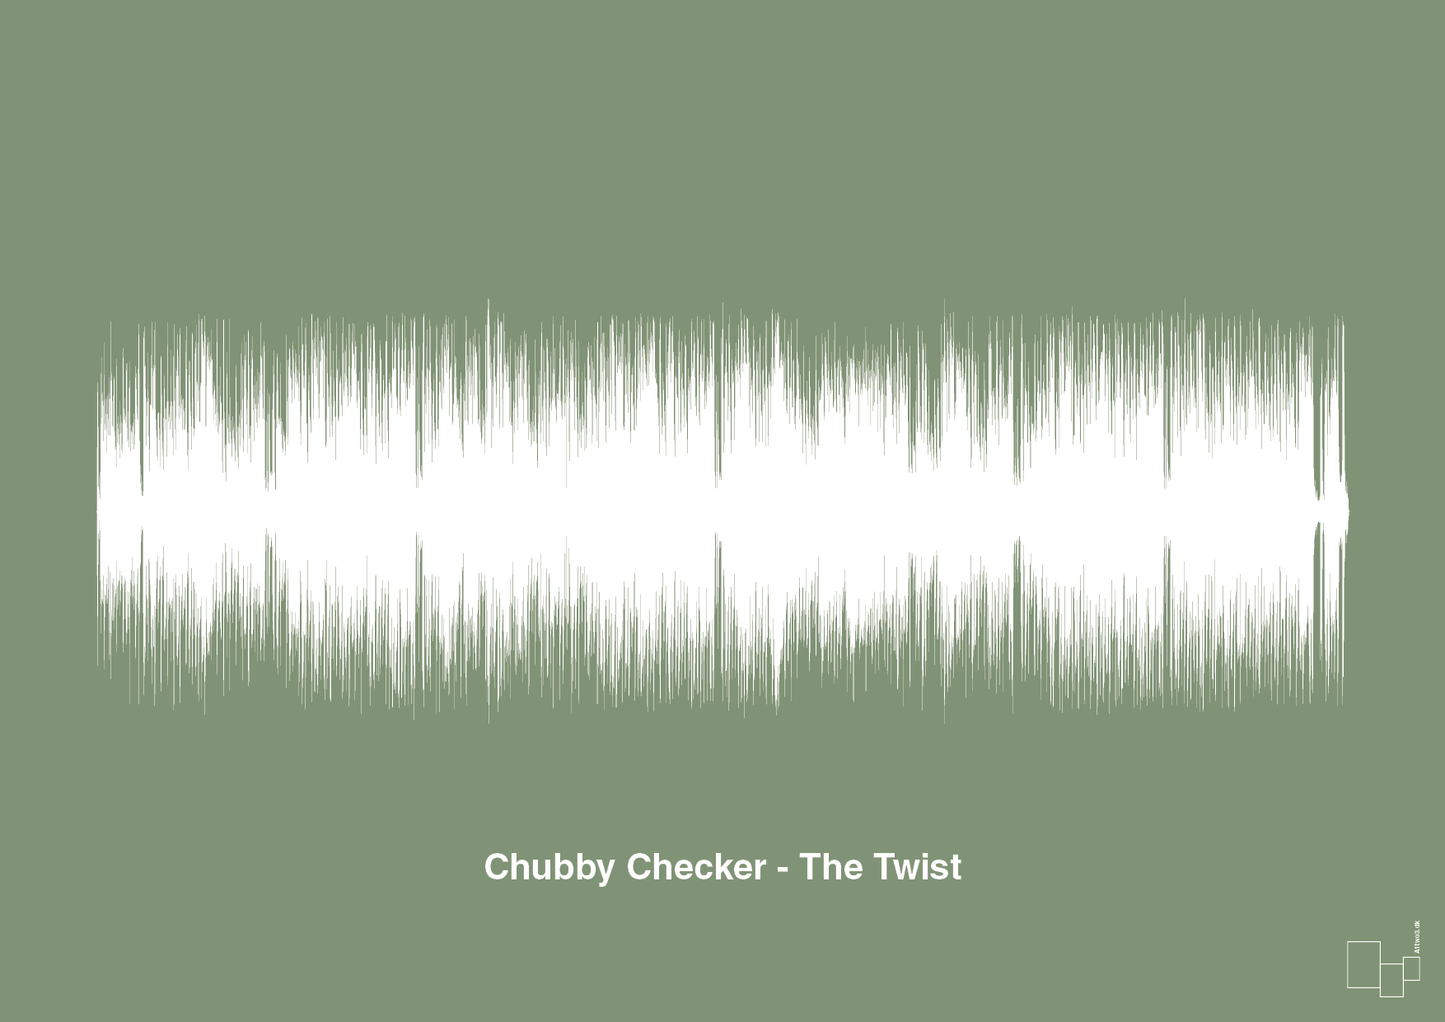 chubby checker - the twist - Plakat med Musik i Jade